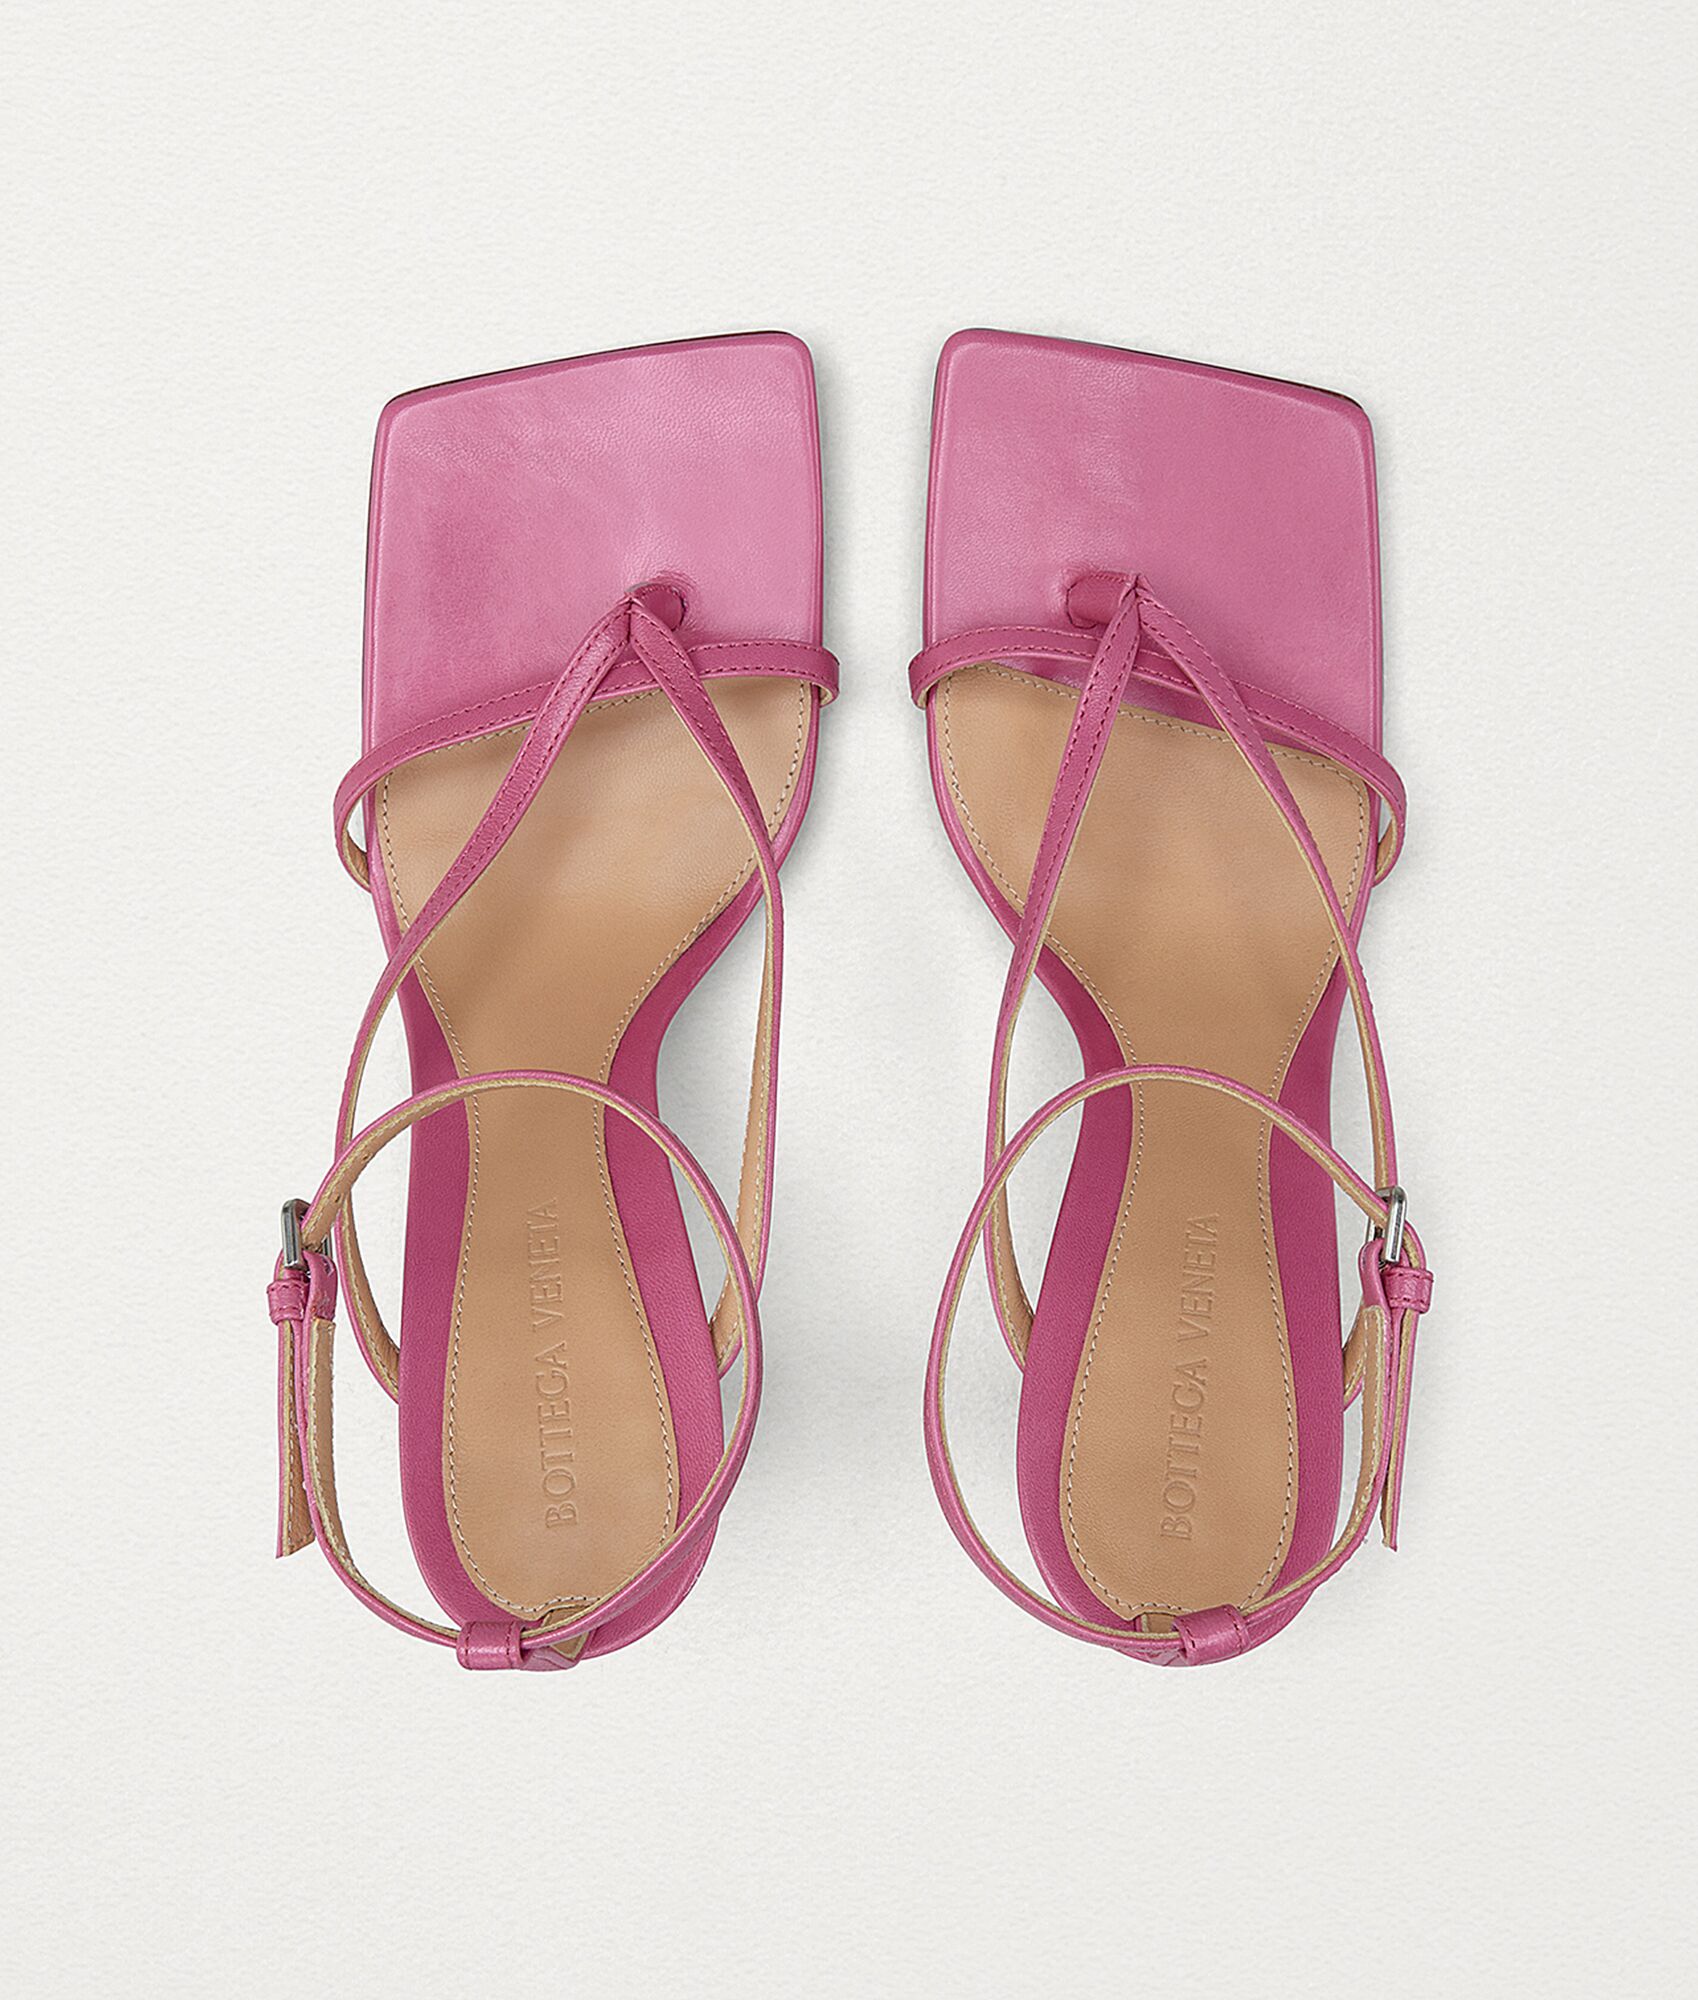 Bottega Veneta® Women's Stretch Strap Sandal in Nero. Shop online now.